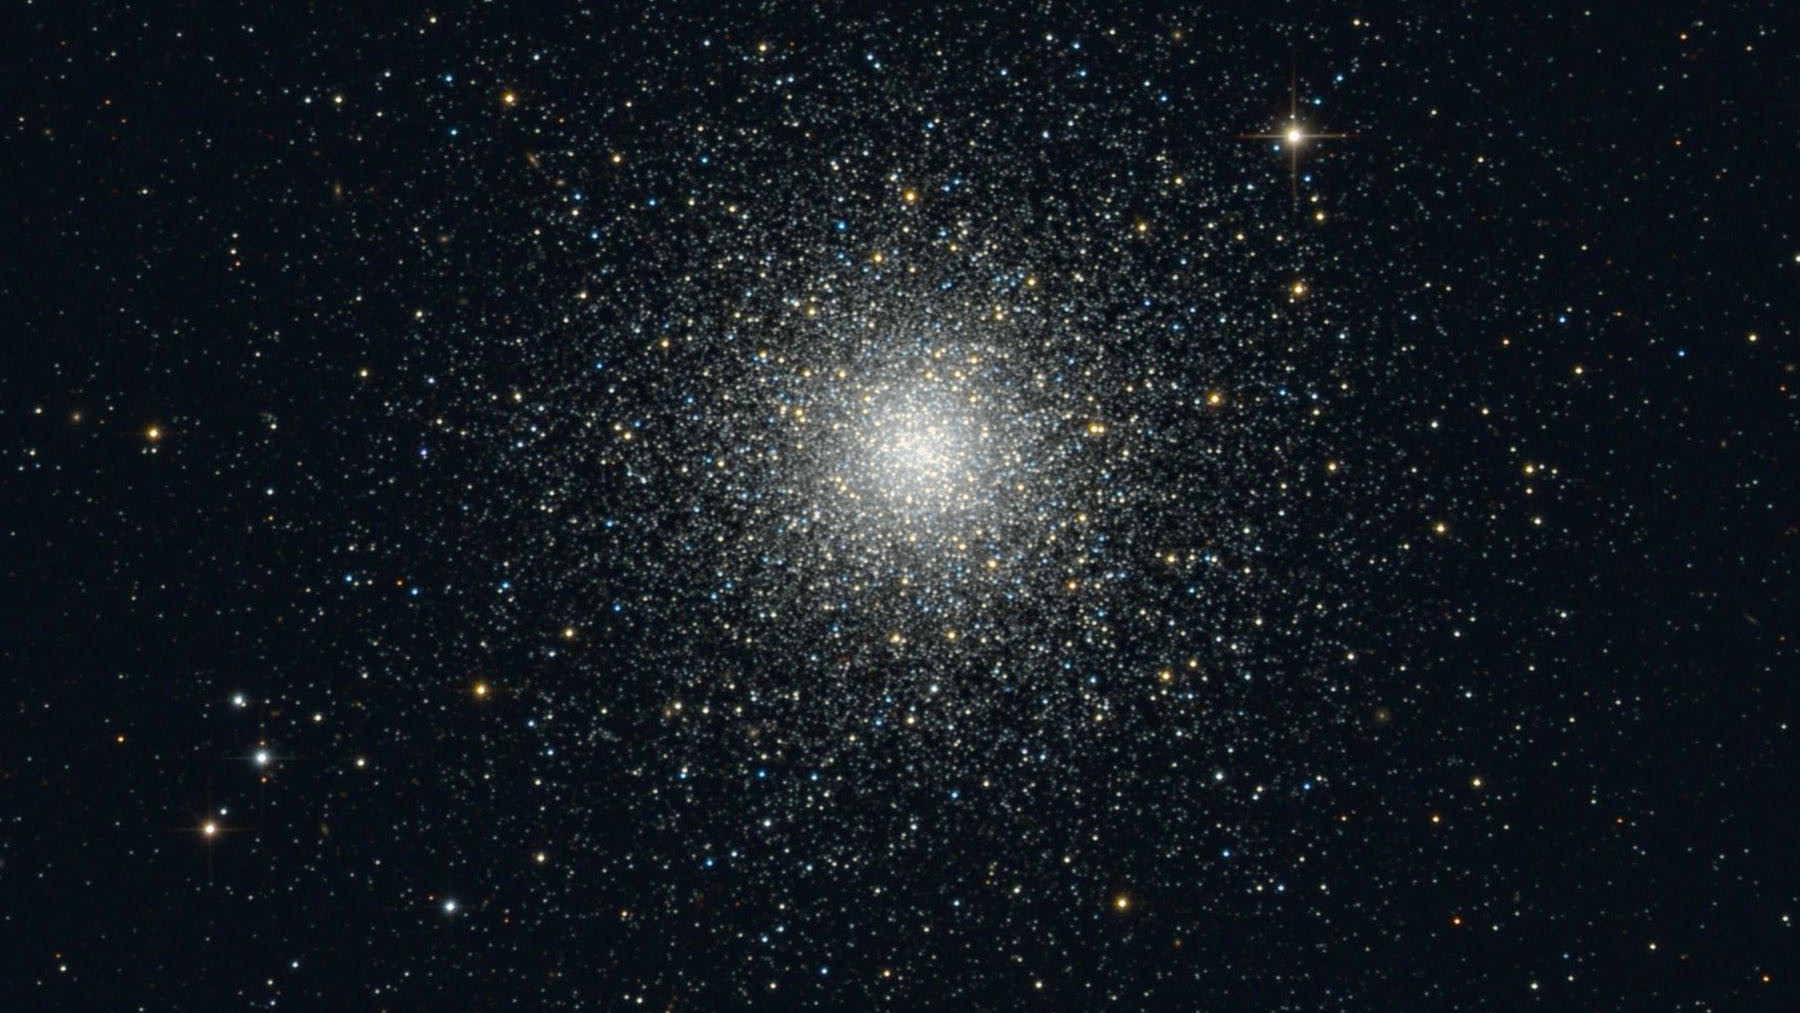 M 3 - prima descoperire proprie a lui Messier